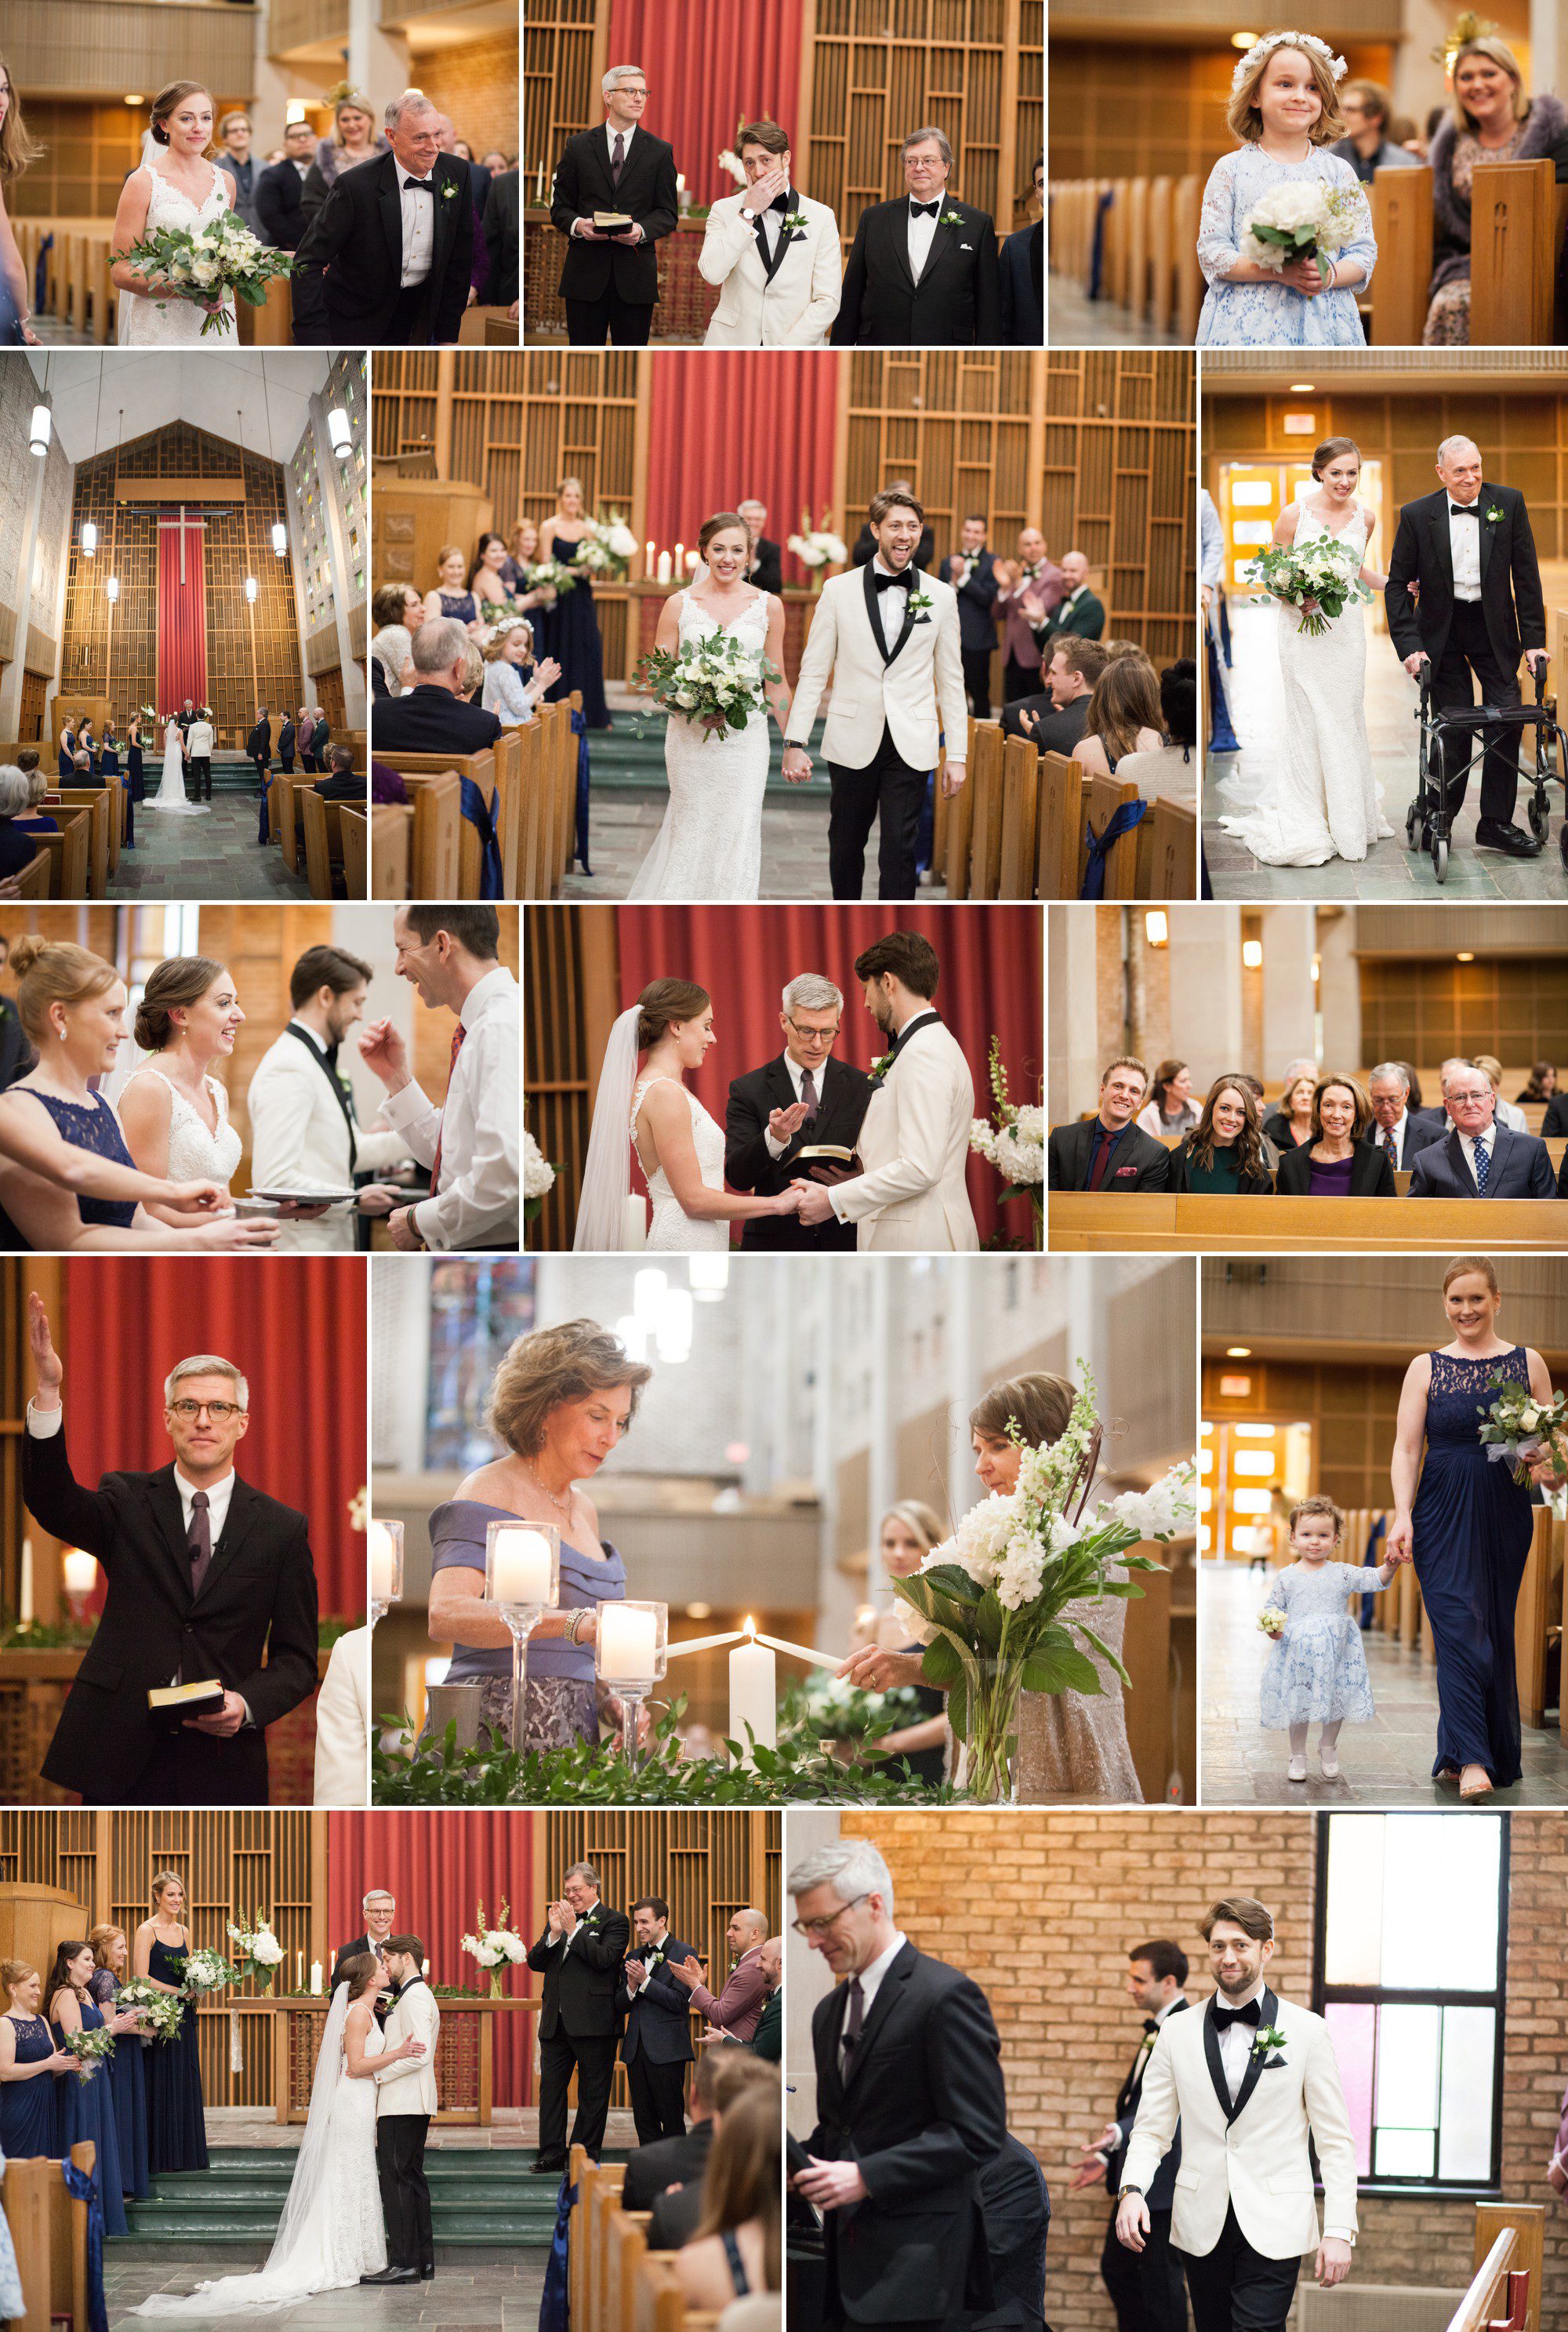 Wedding ceremony at Benton Chapel in Nashville TN. Wedding photography by Krista Lee.